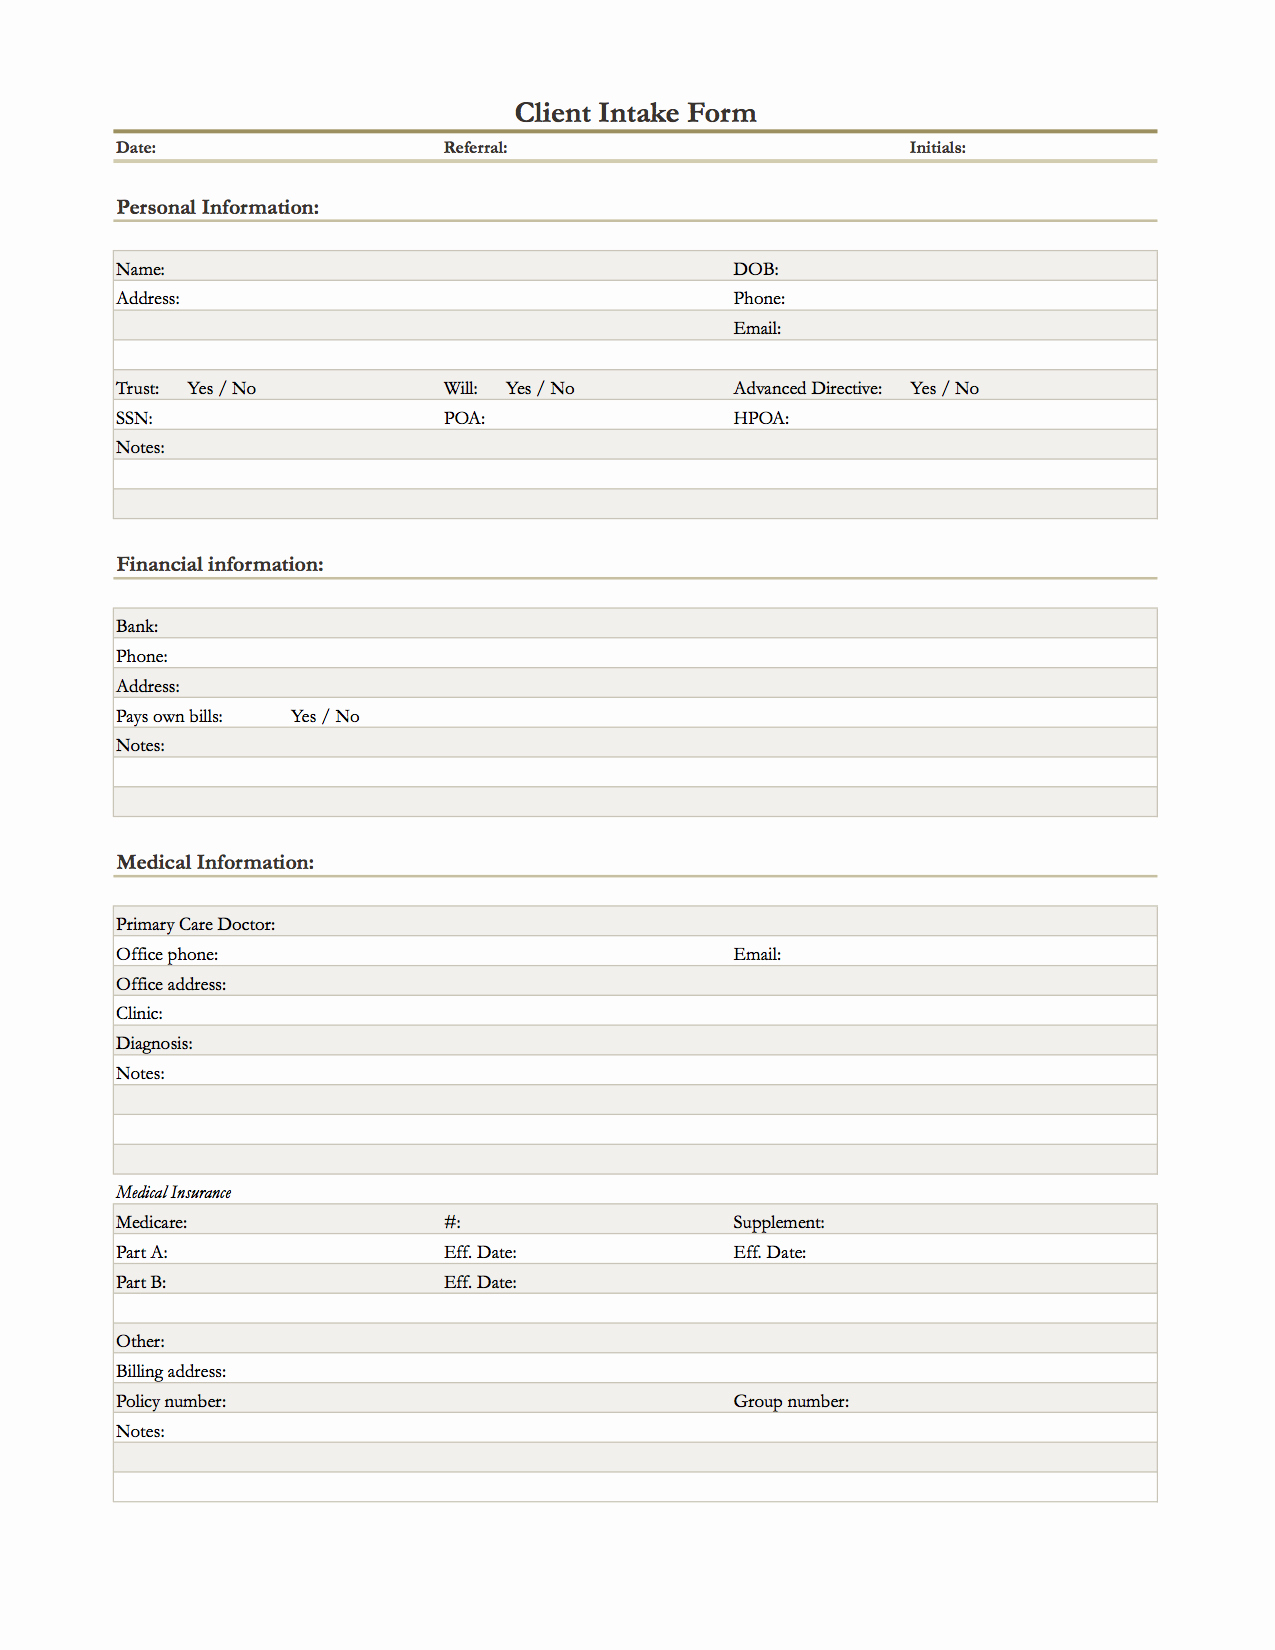 Customer Information Sheet Template Fresh Contact Information Template Word Portablegasgrillweber